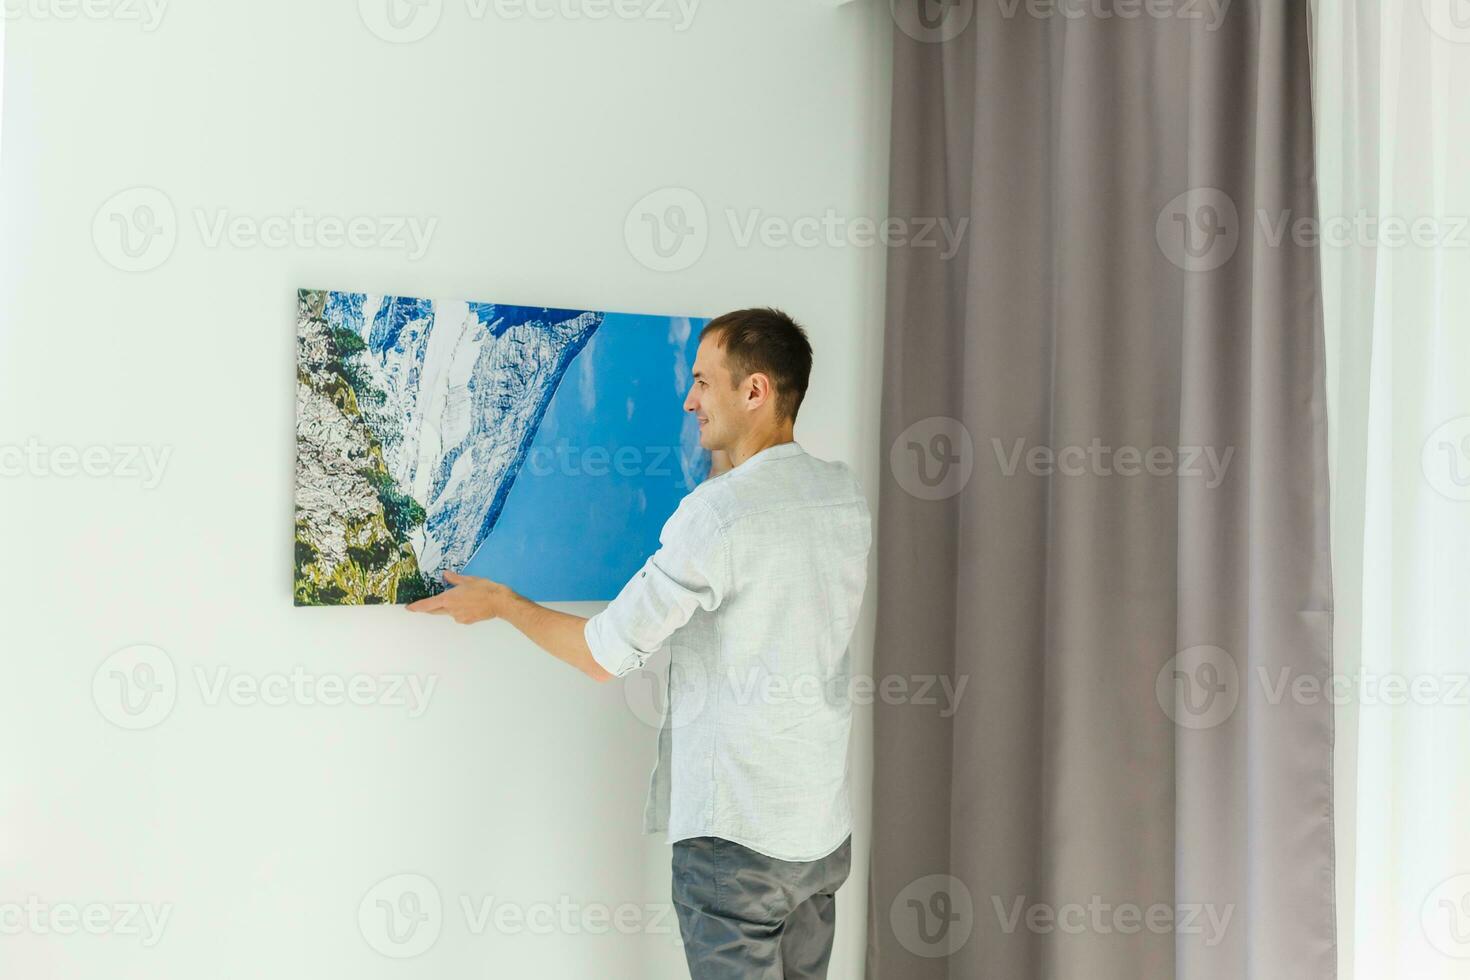 Mens houdt canvas in de interieur foto